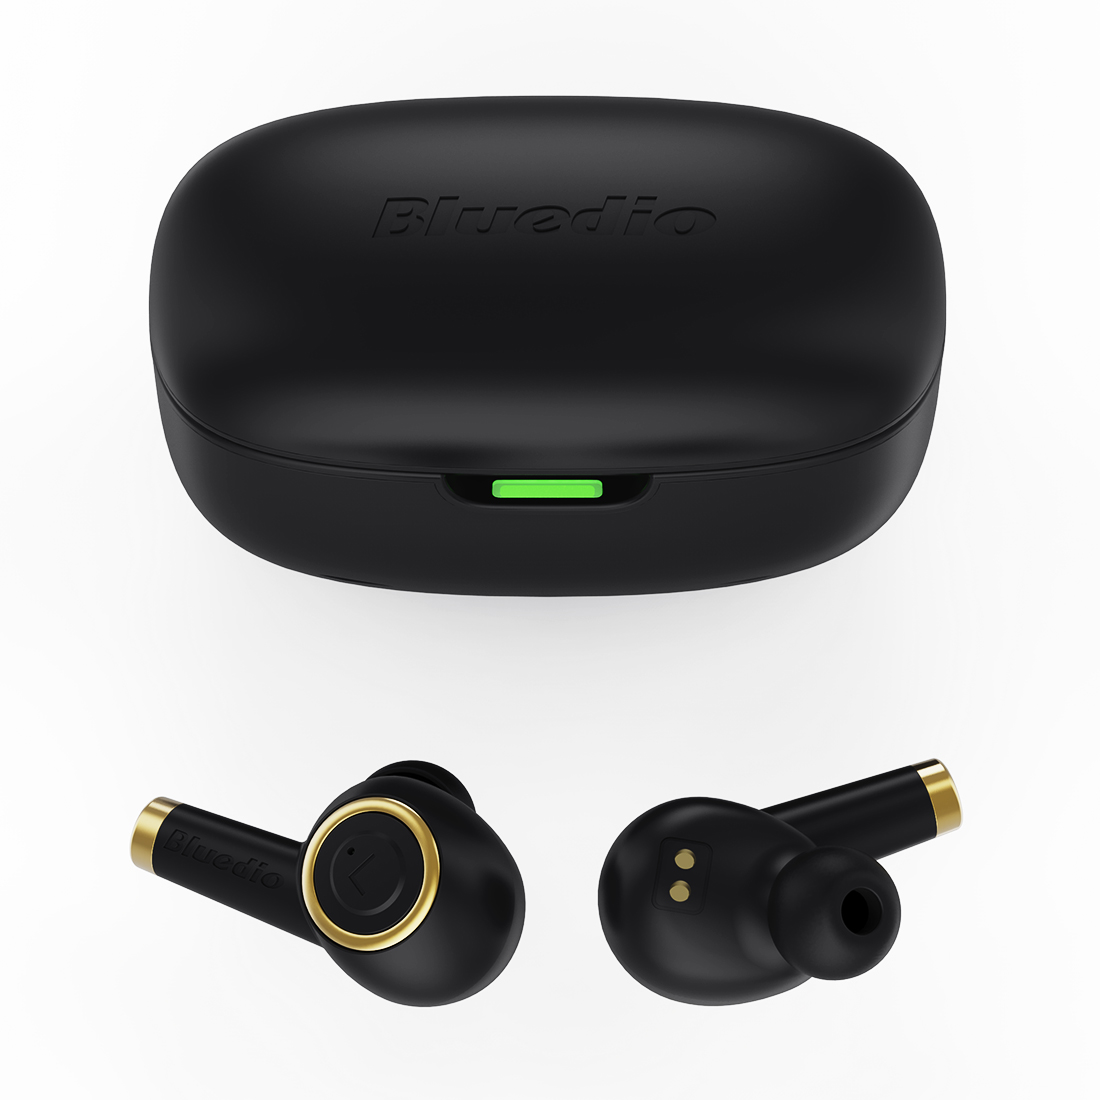 Bluedio Particle trådlösa Bluetooth-hörlurar